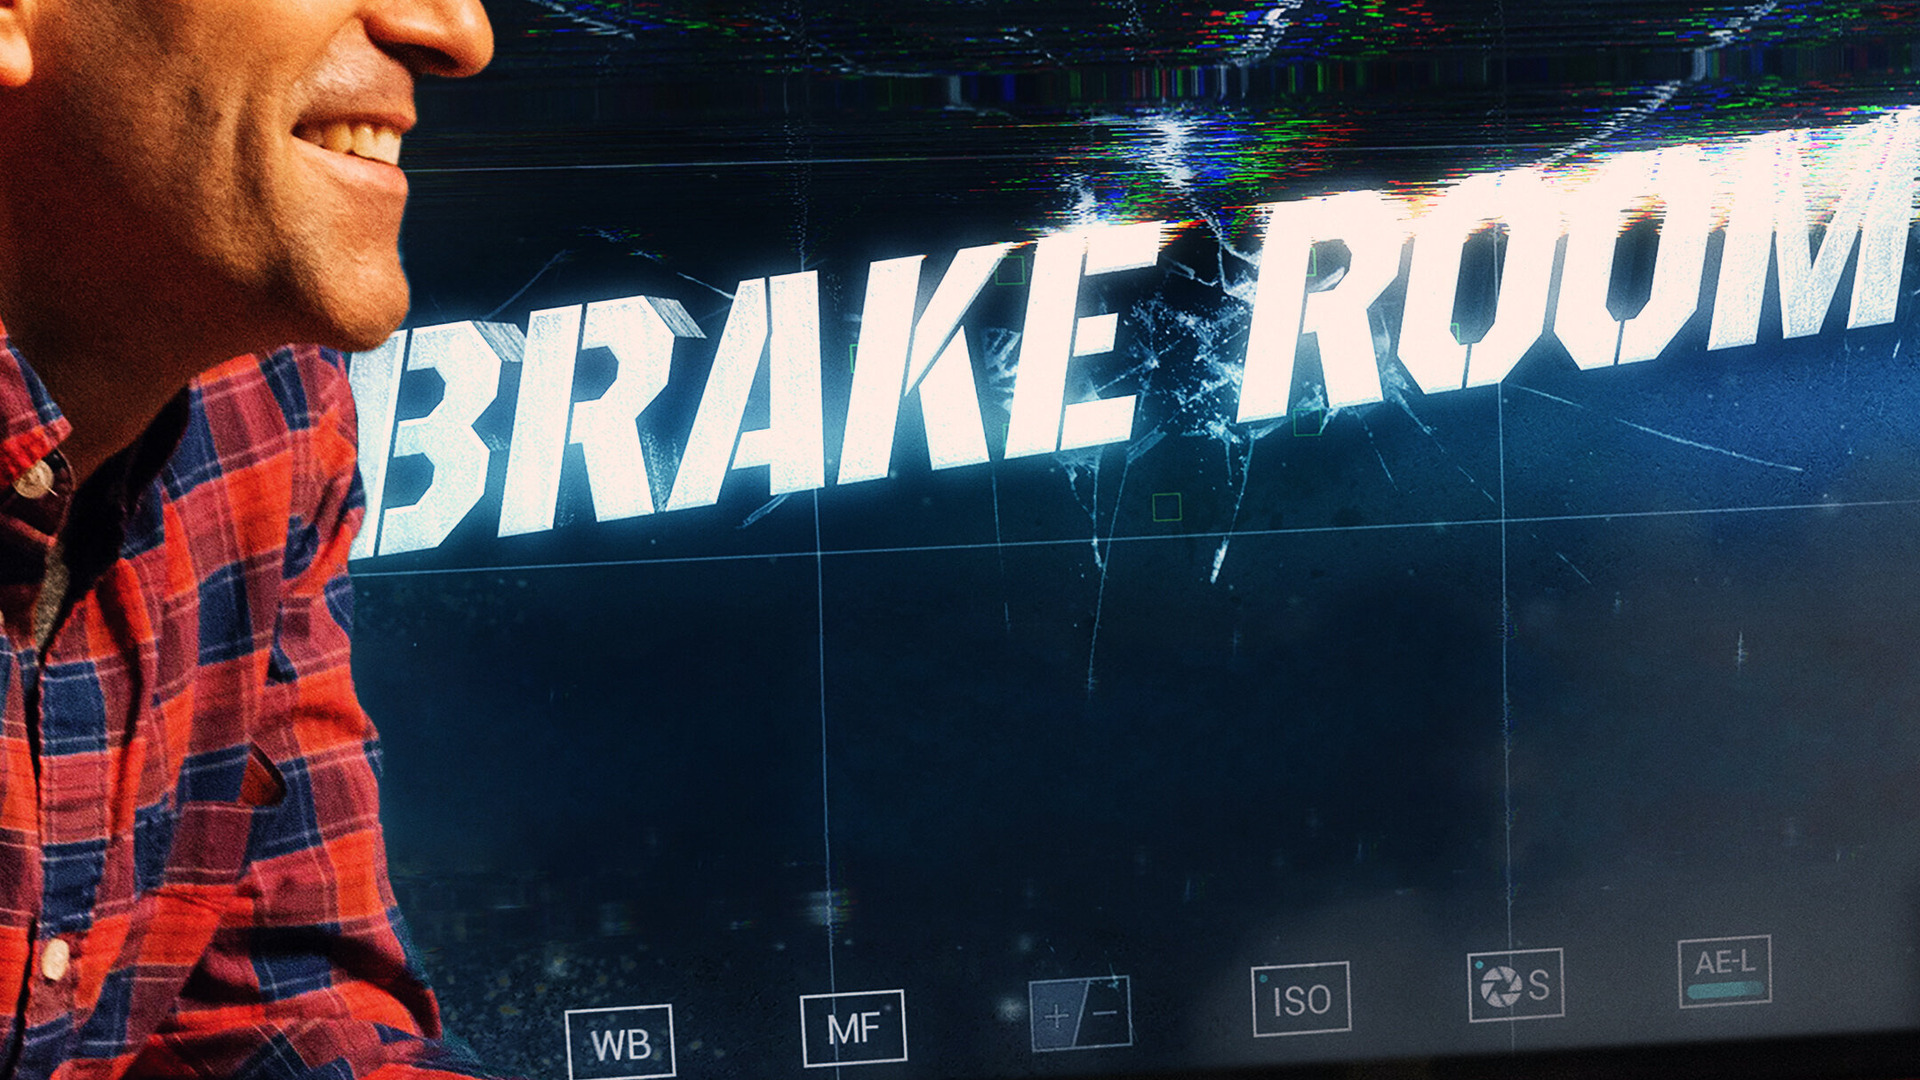 Show Brake Room